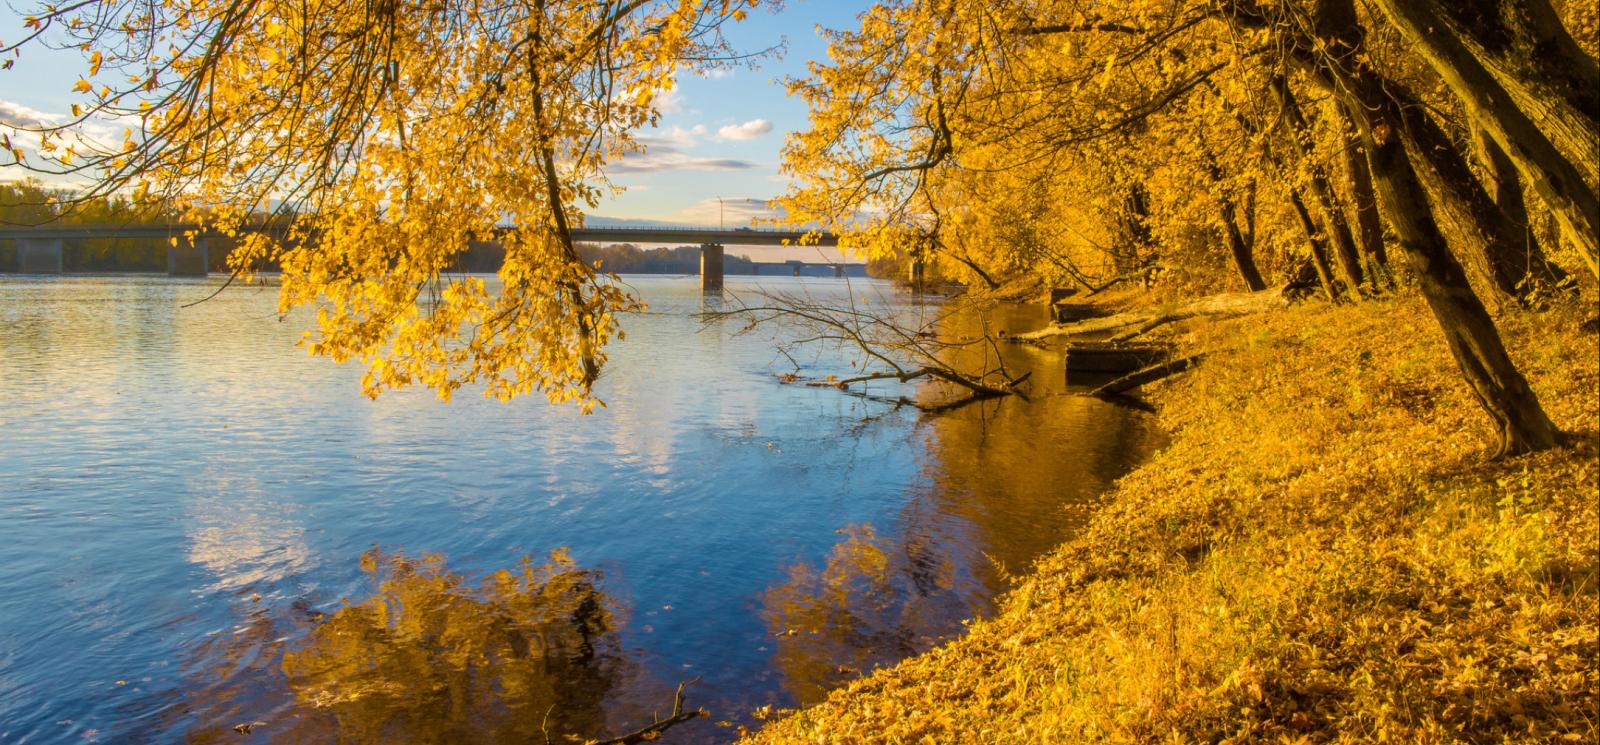 Vista del canal Windsor Locks durante el otoño (Flickr@Jennifer-Yakey-Ault)